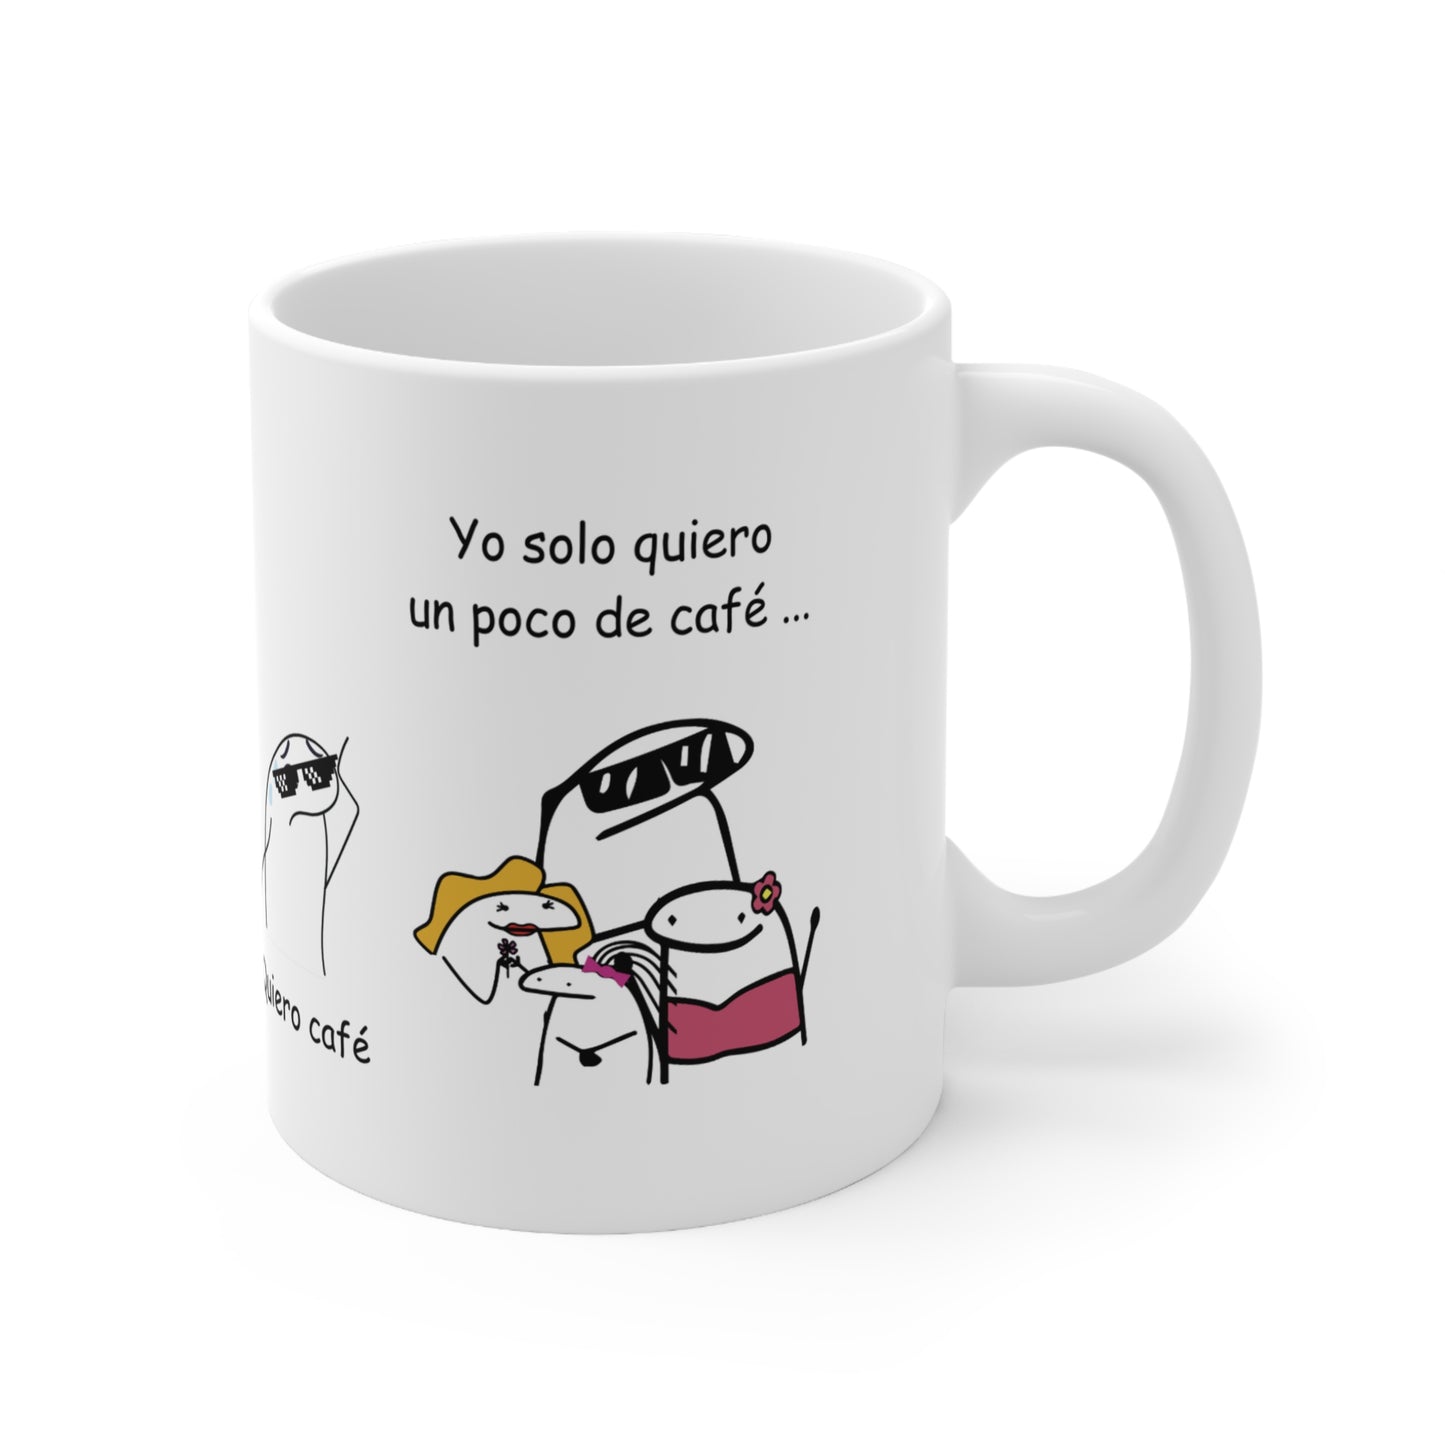 Quiero Cafe Mug 